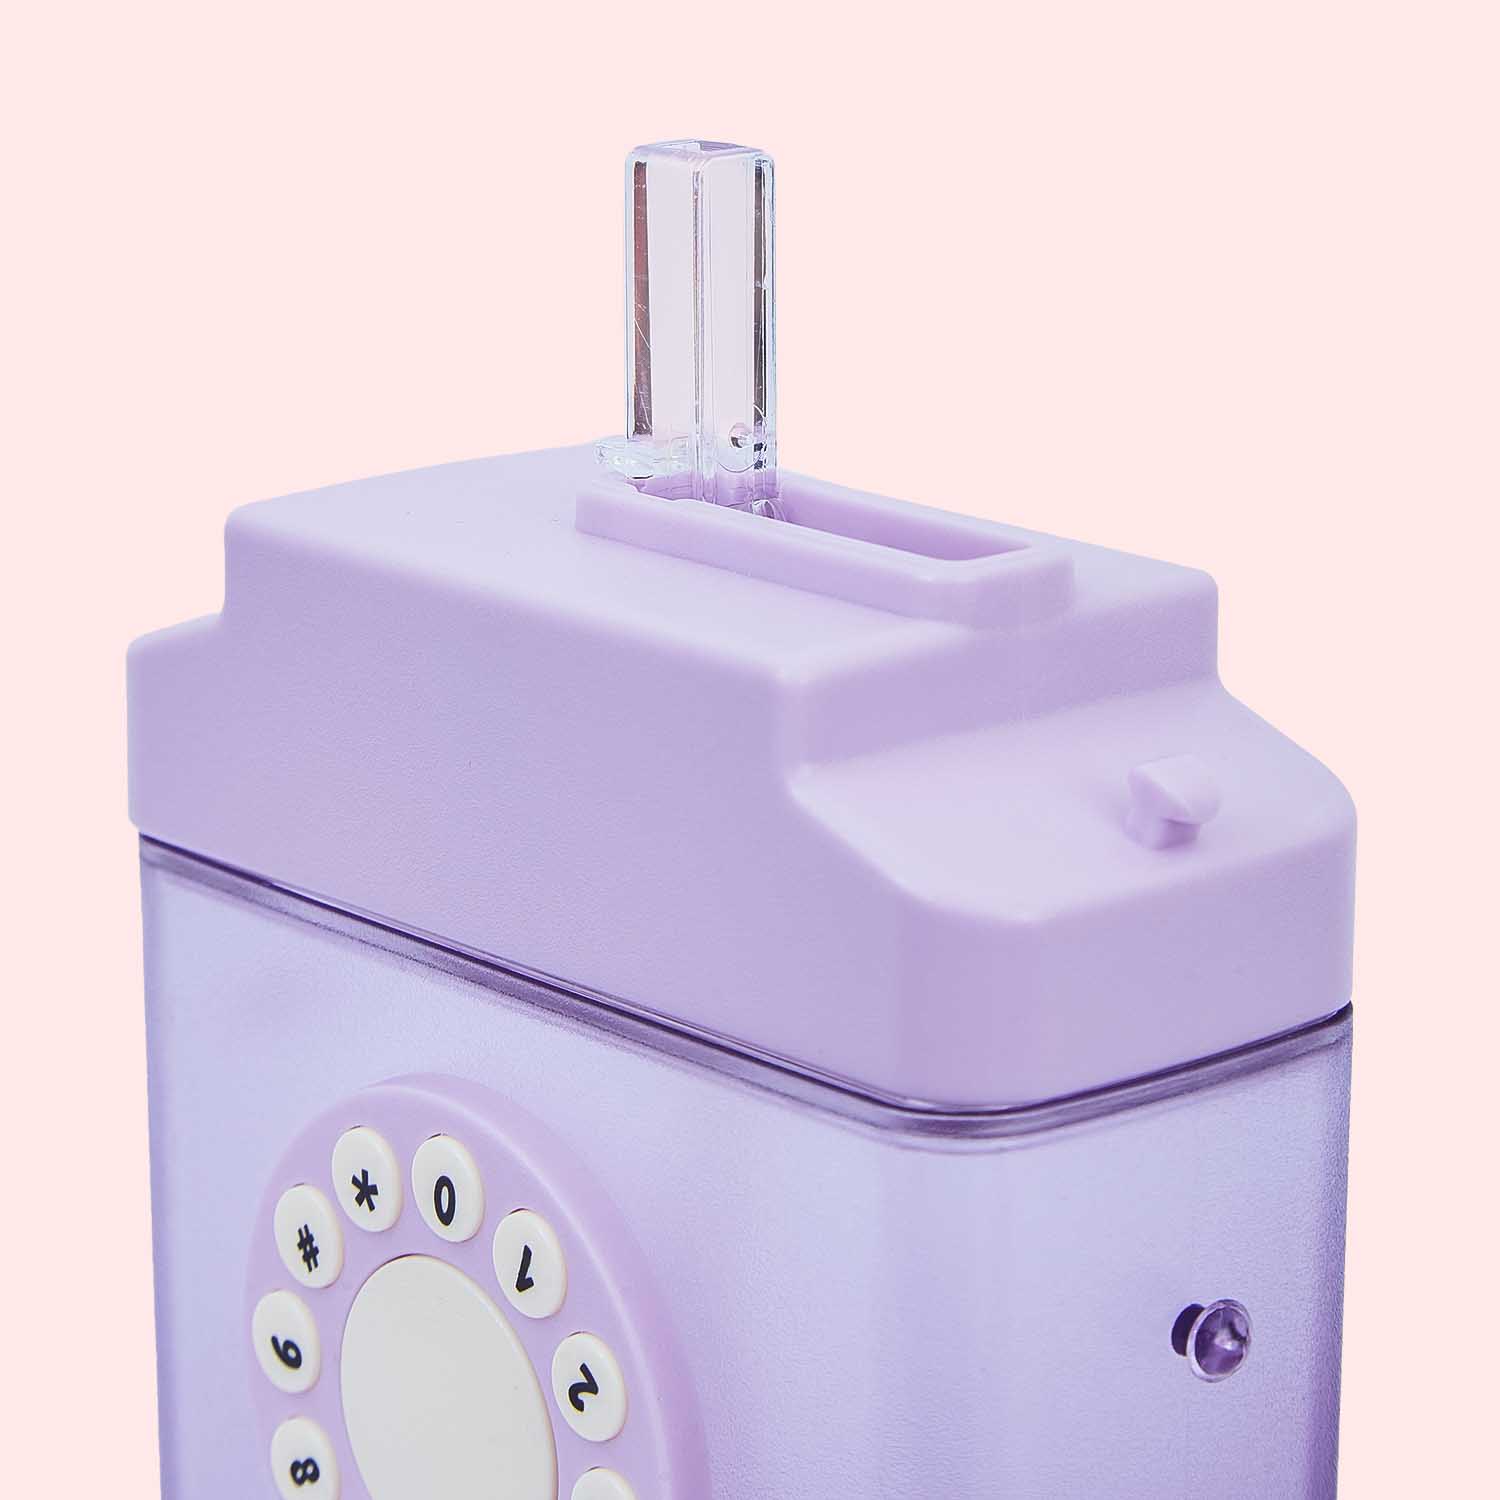 Cute Rotating Rotor Telephone Sipper - 400ml - Purple